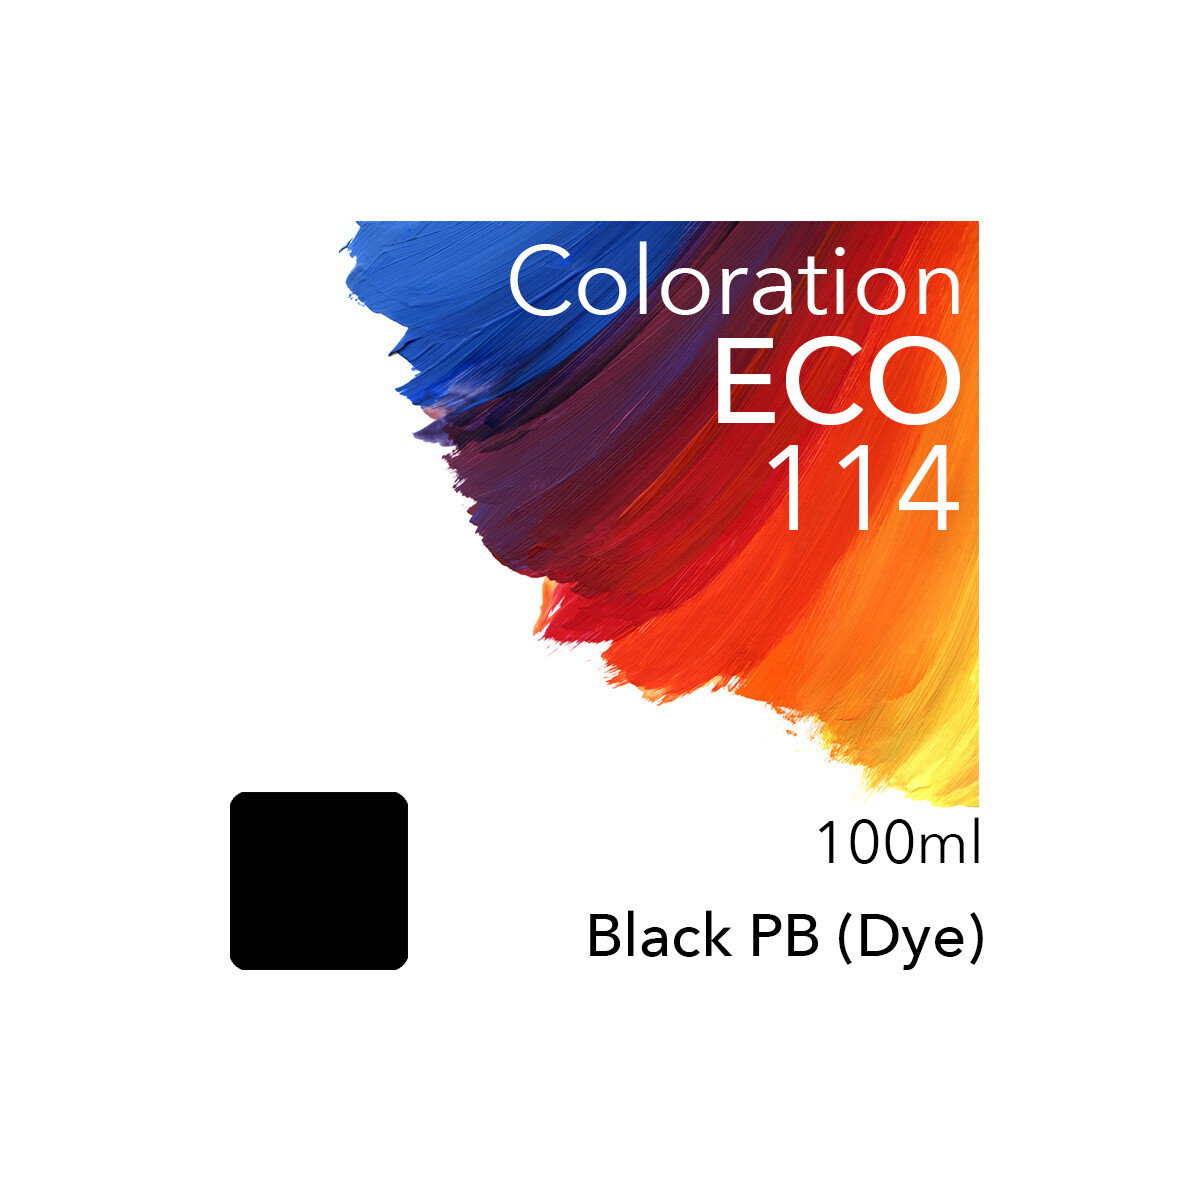 Coloration ECO kompatibel zu Epson 114 PB (Photo-Black)...